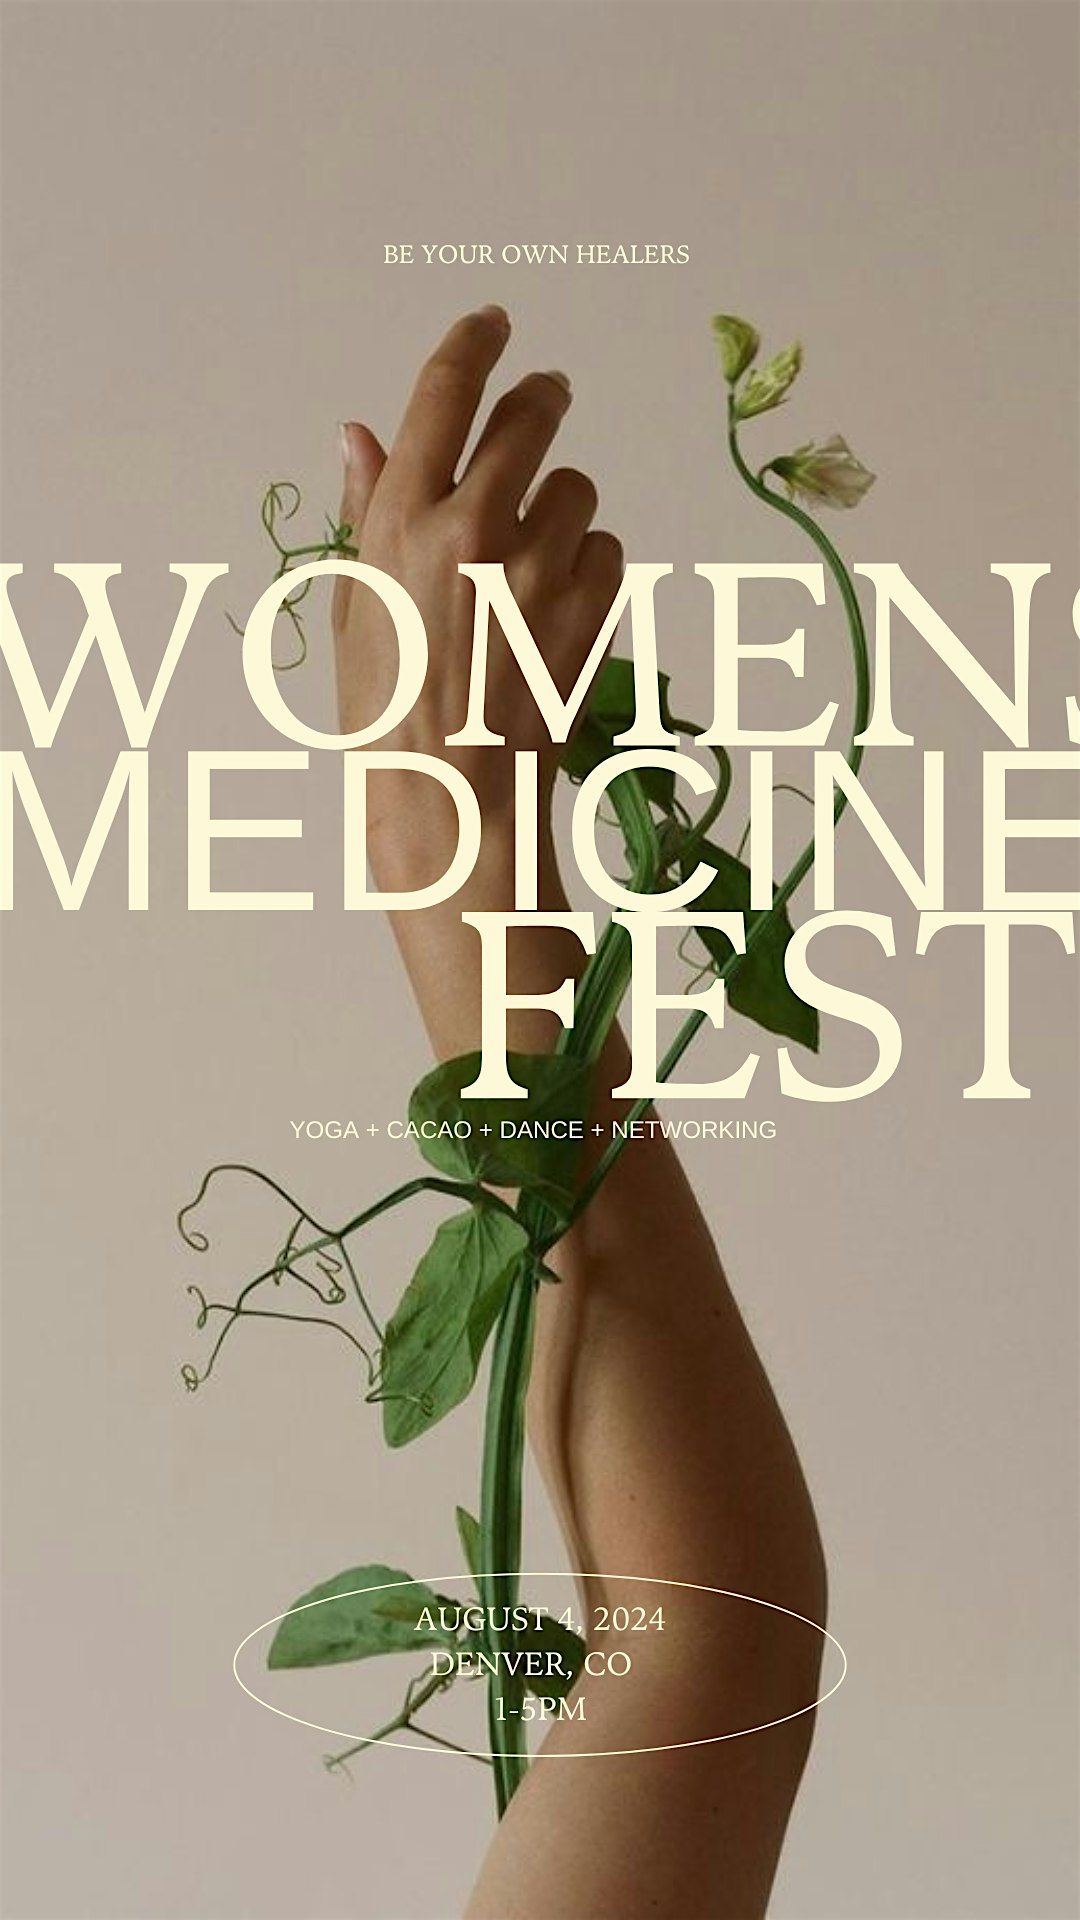 Womens Medicine Fest DENVER CO